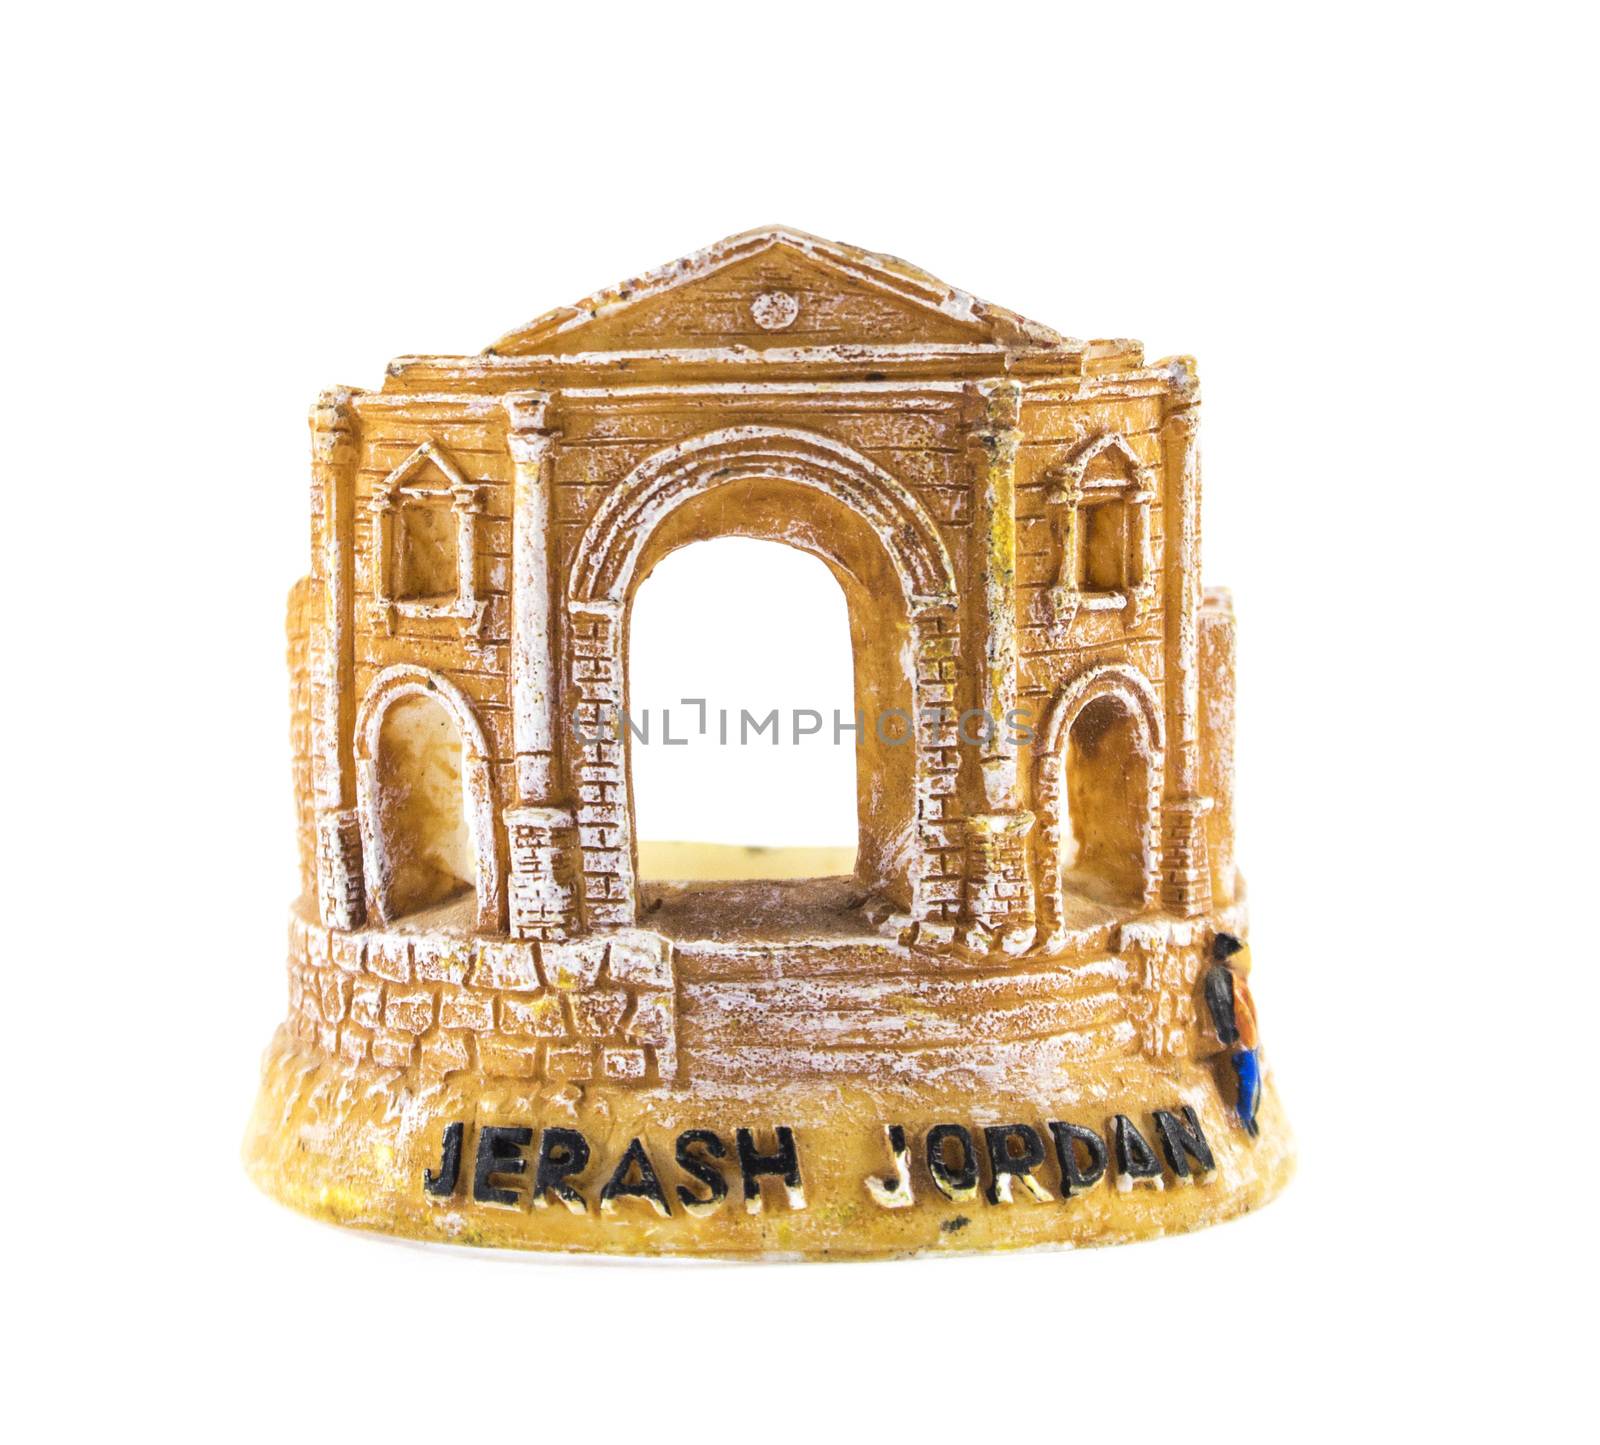 Jerash Souvenir by designsstock